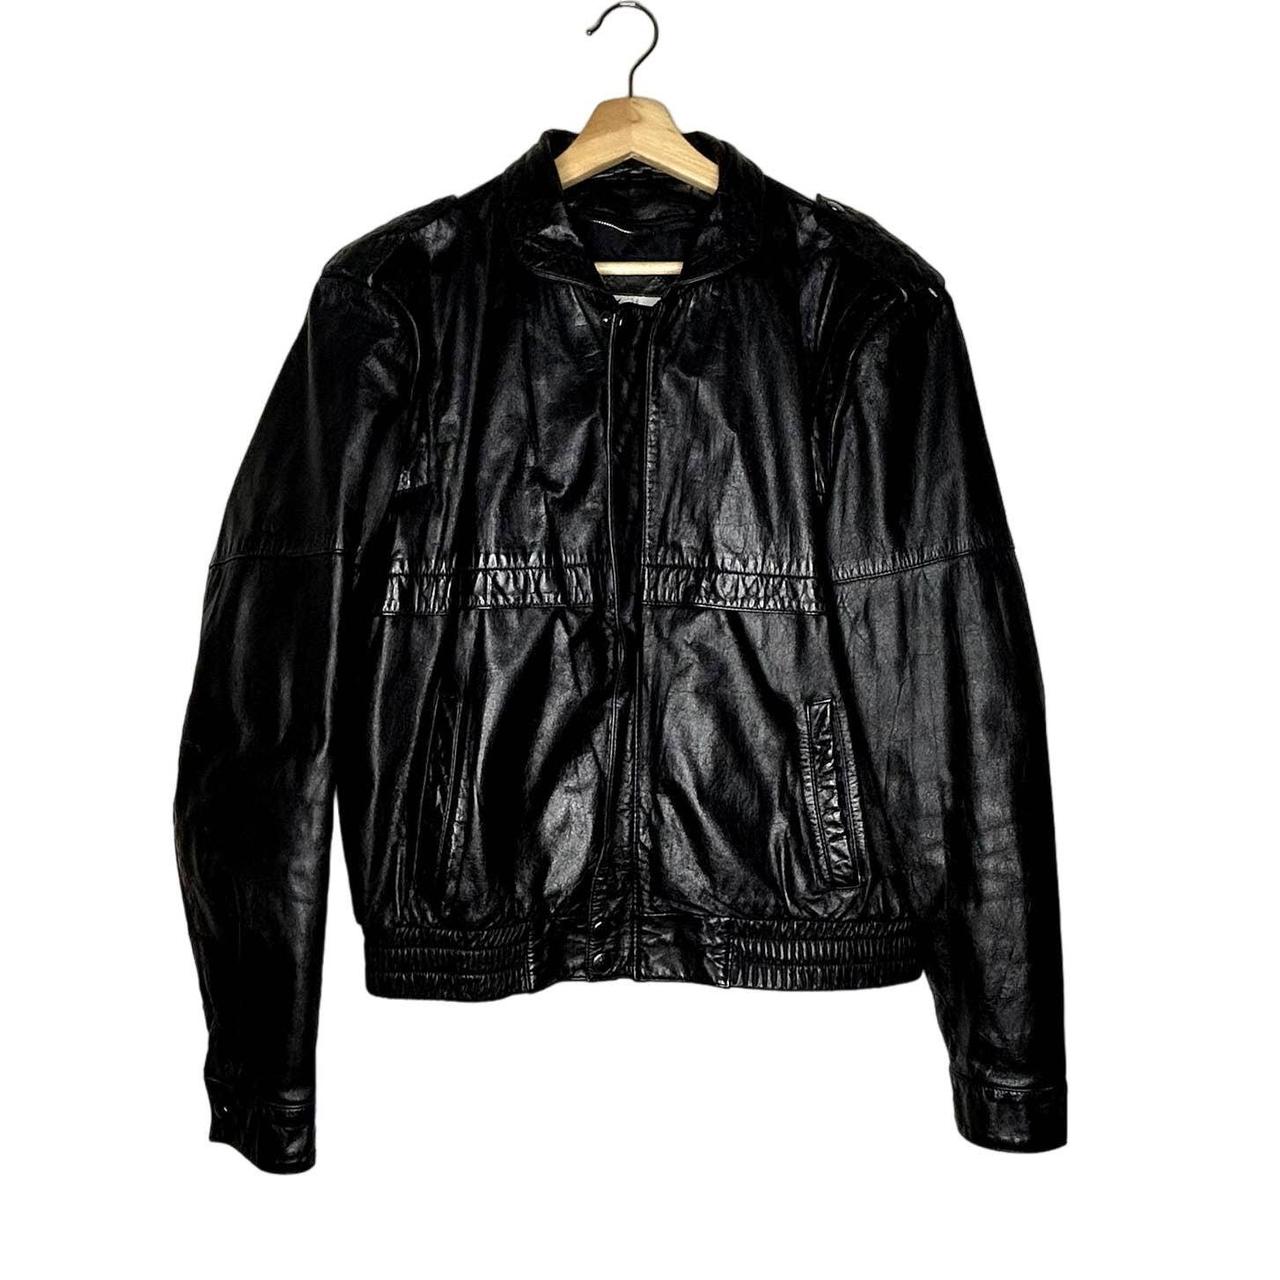 Chess King Vintage Black Leather Jacket Condition... - Depop